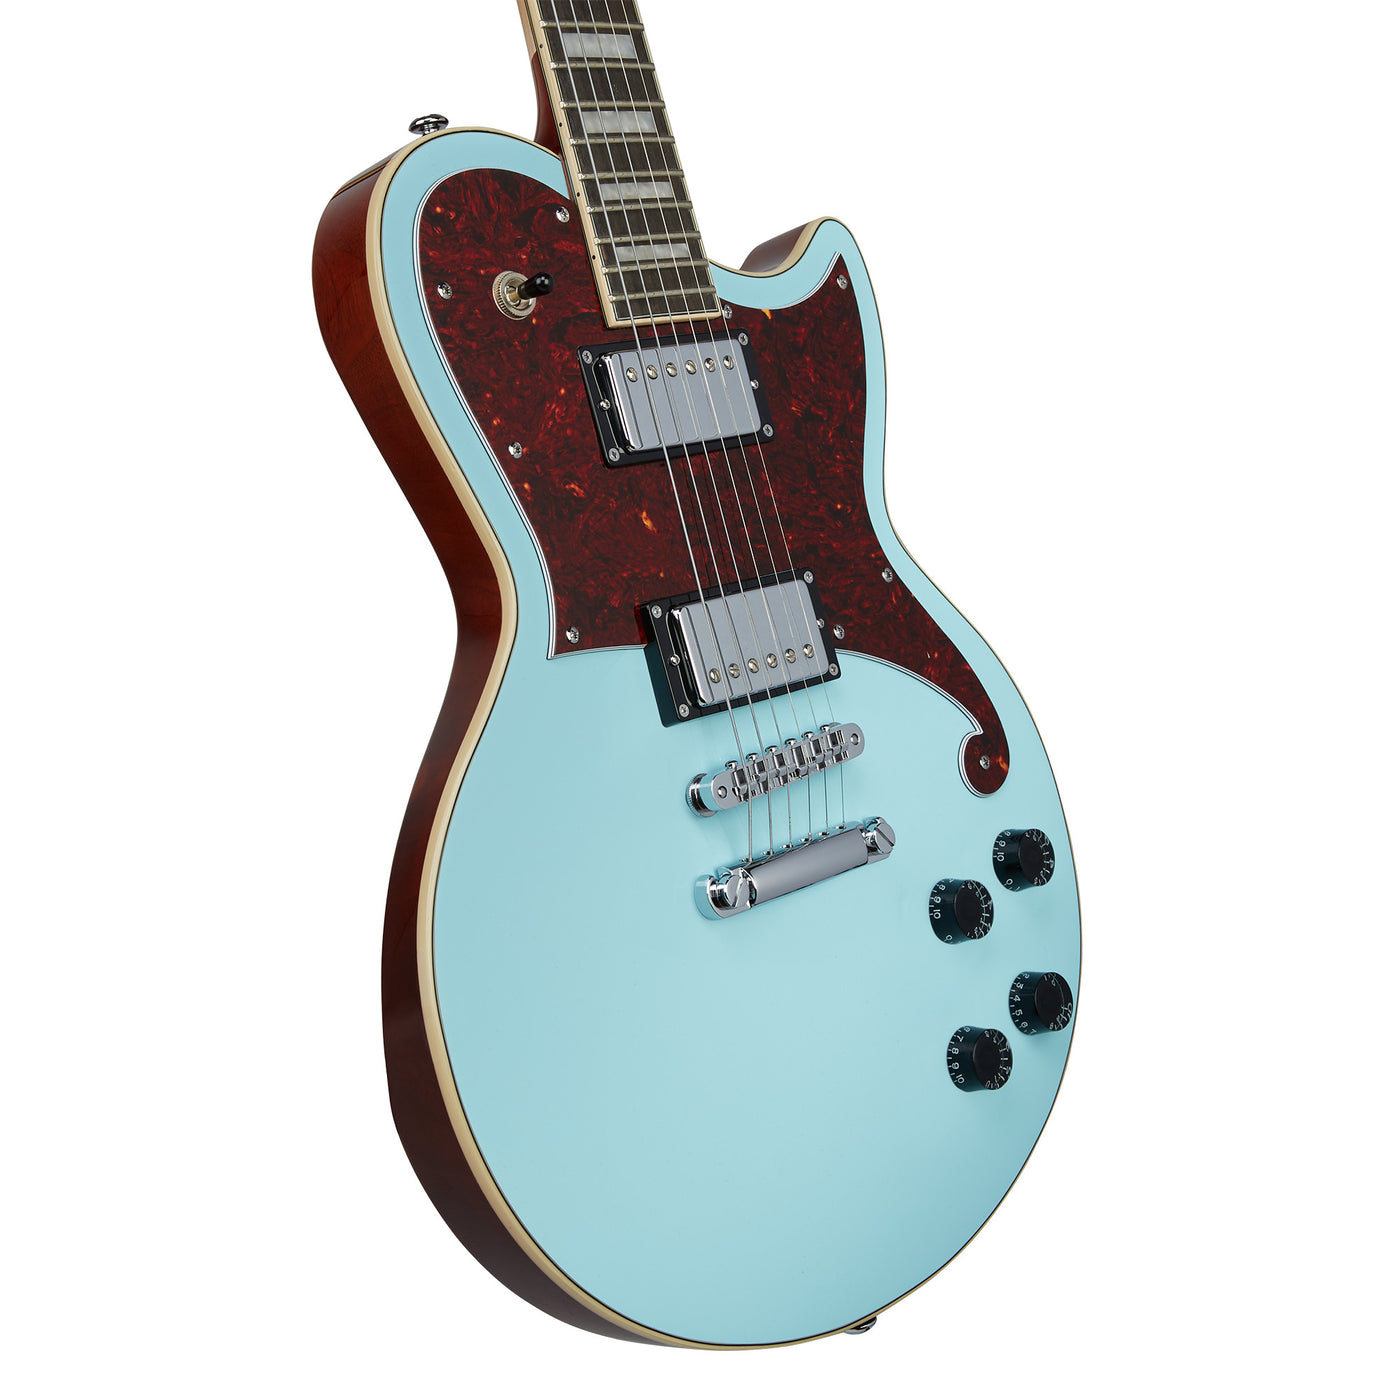 D’Angelico Premier Atlantic Electric Guitar with Stopbar Tailpiece, Sky Blue (DAPATLSBMCS)